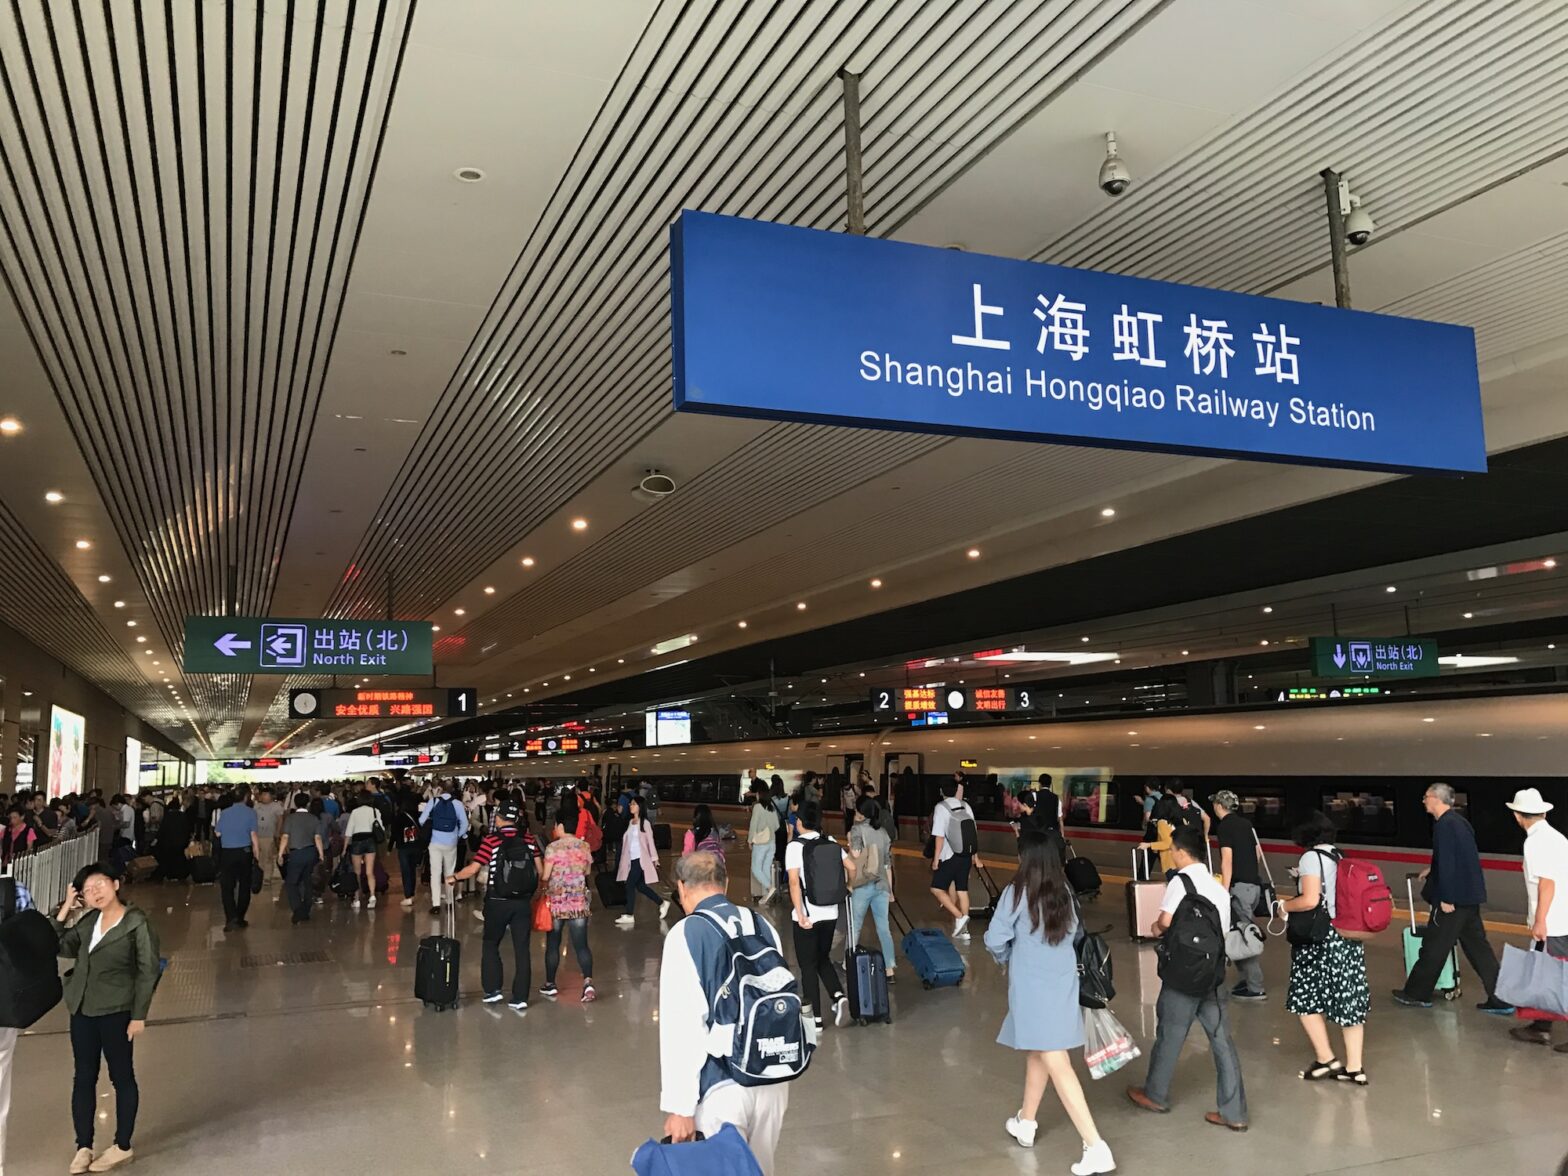 Platform 1, Shanghai Hongqiao Railway Station